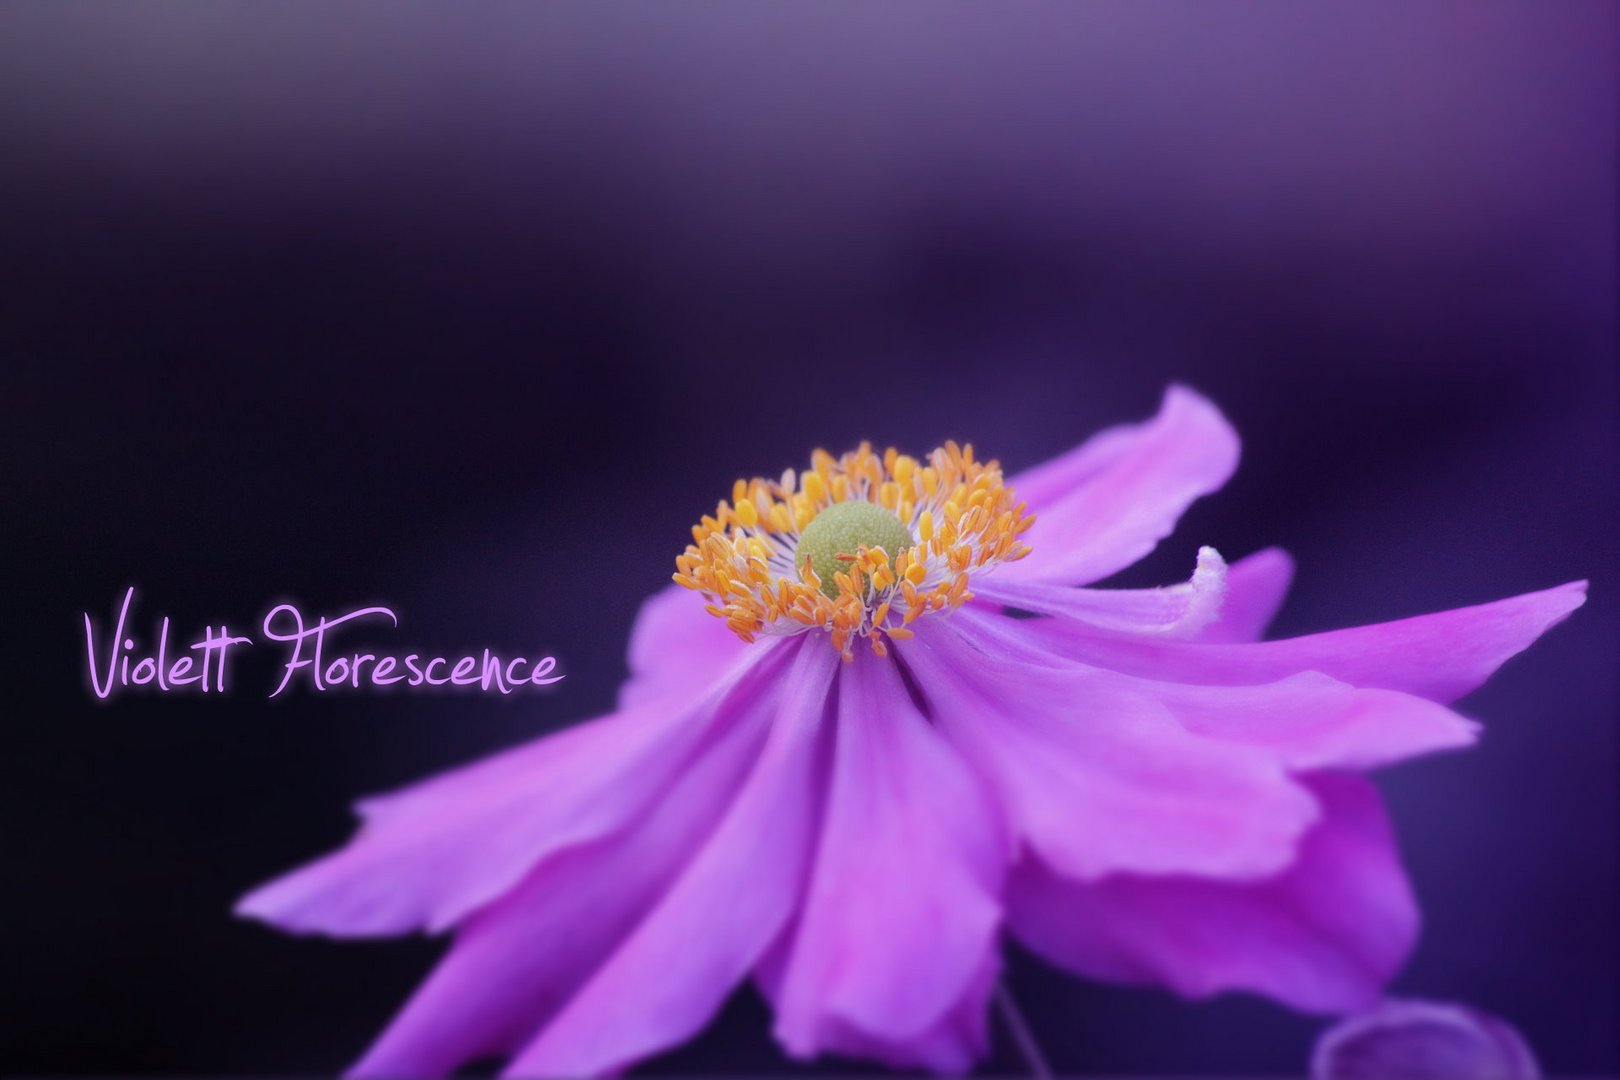 Violett Florescence